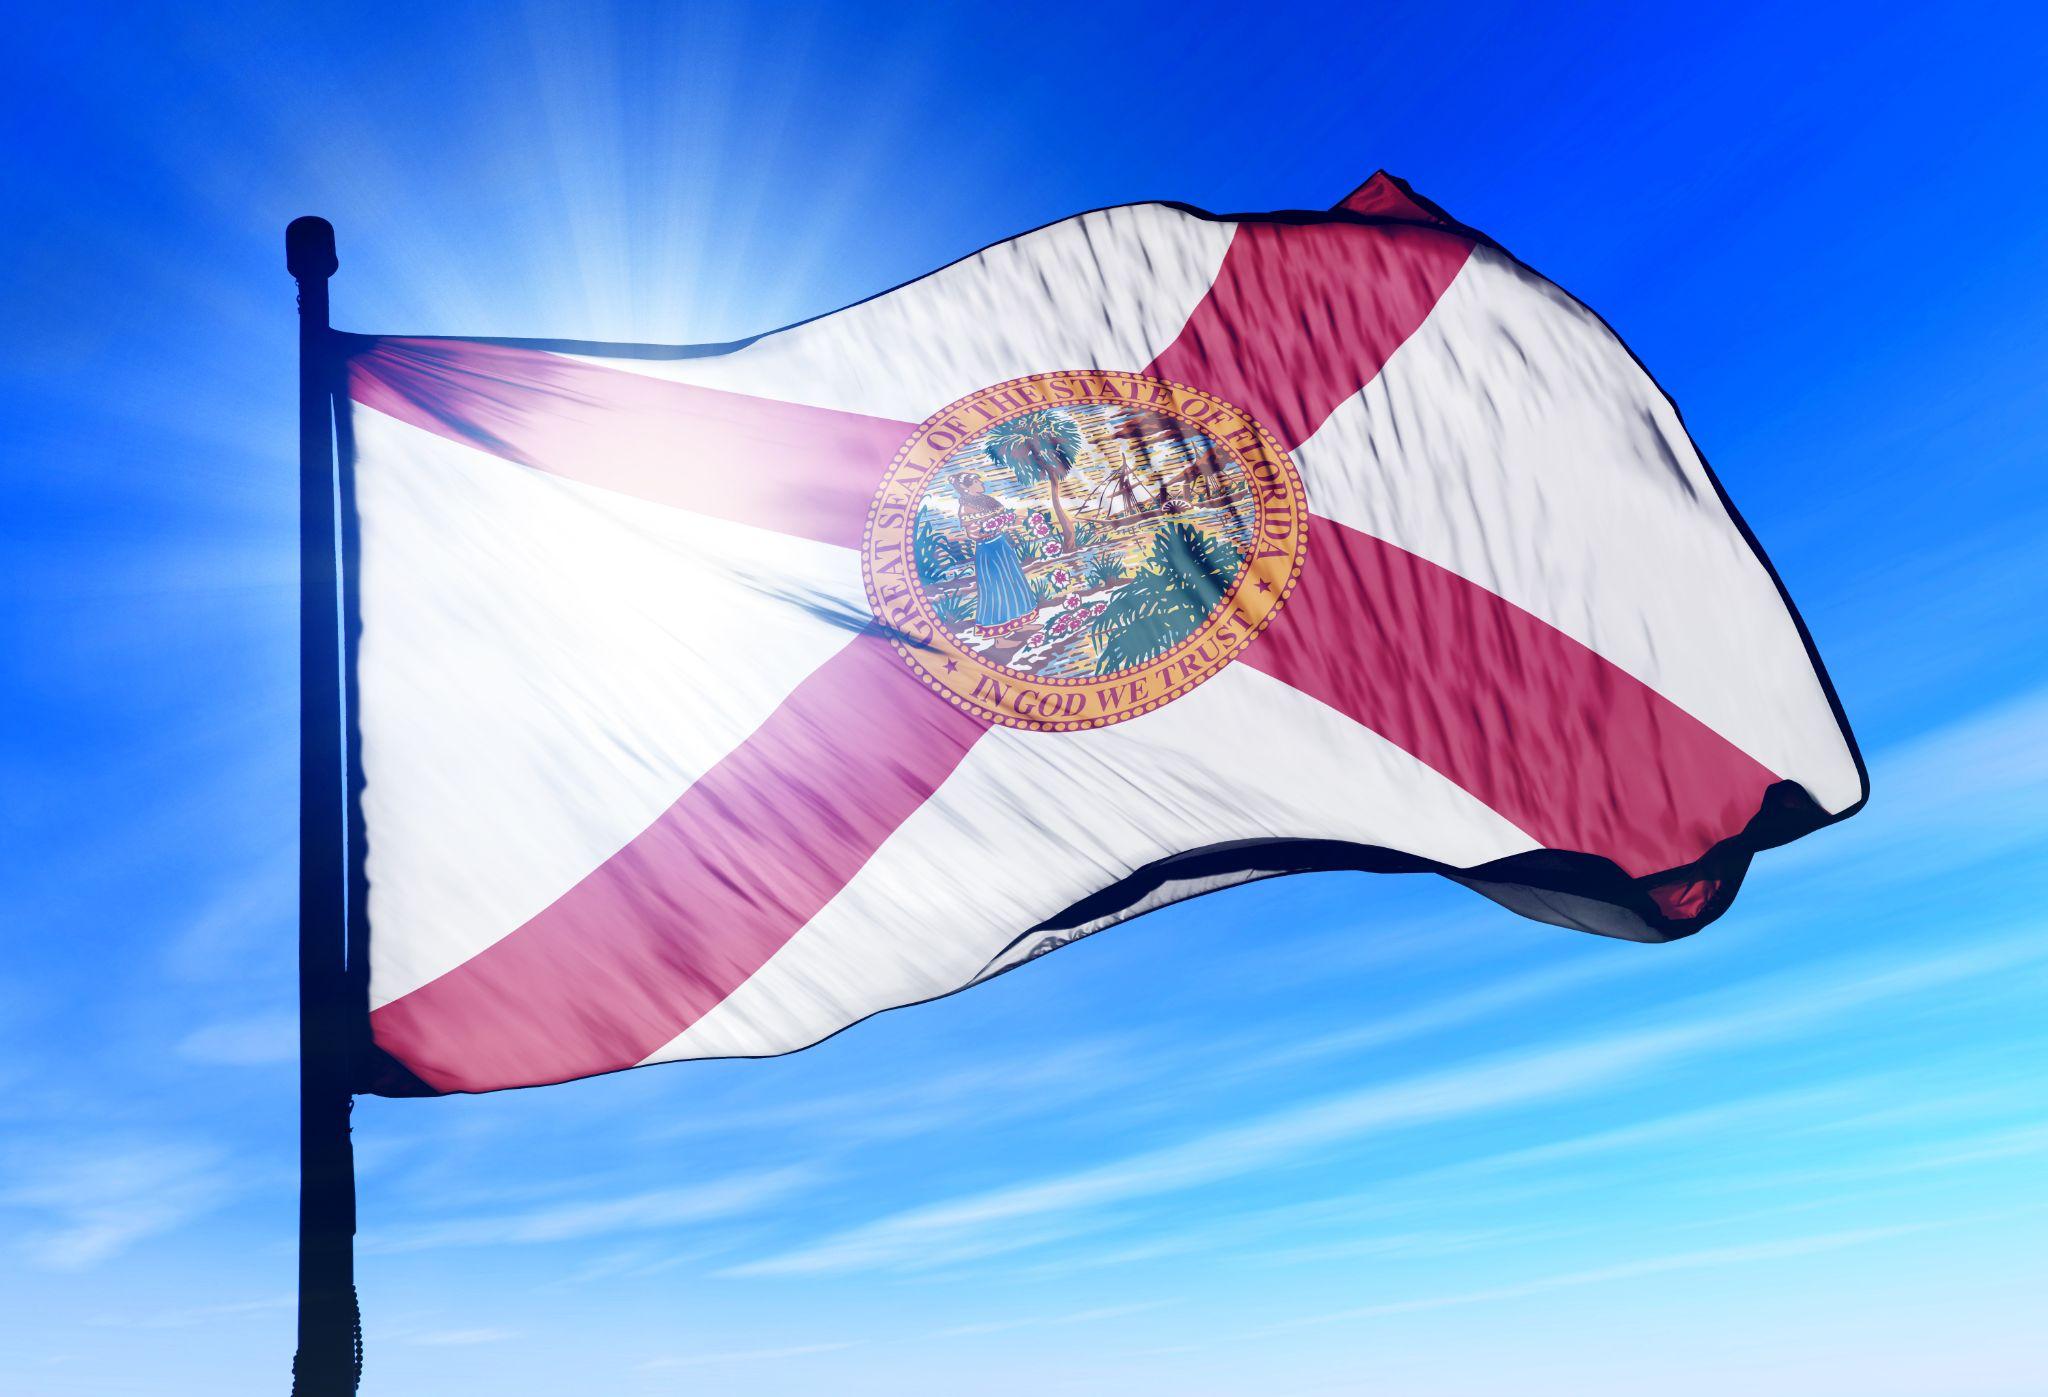 Florida (U.S. state) flag waving against clear blue sky